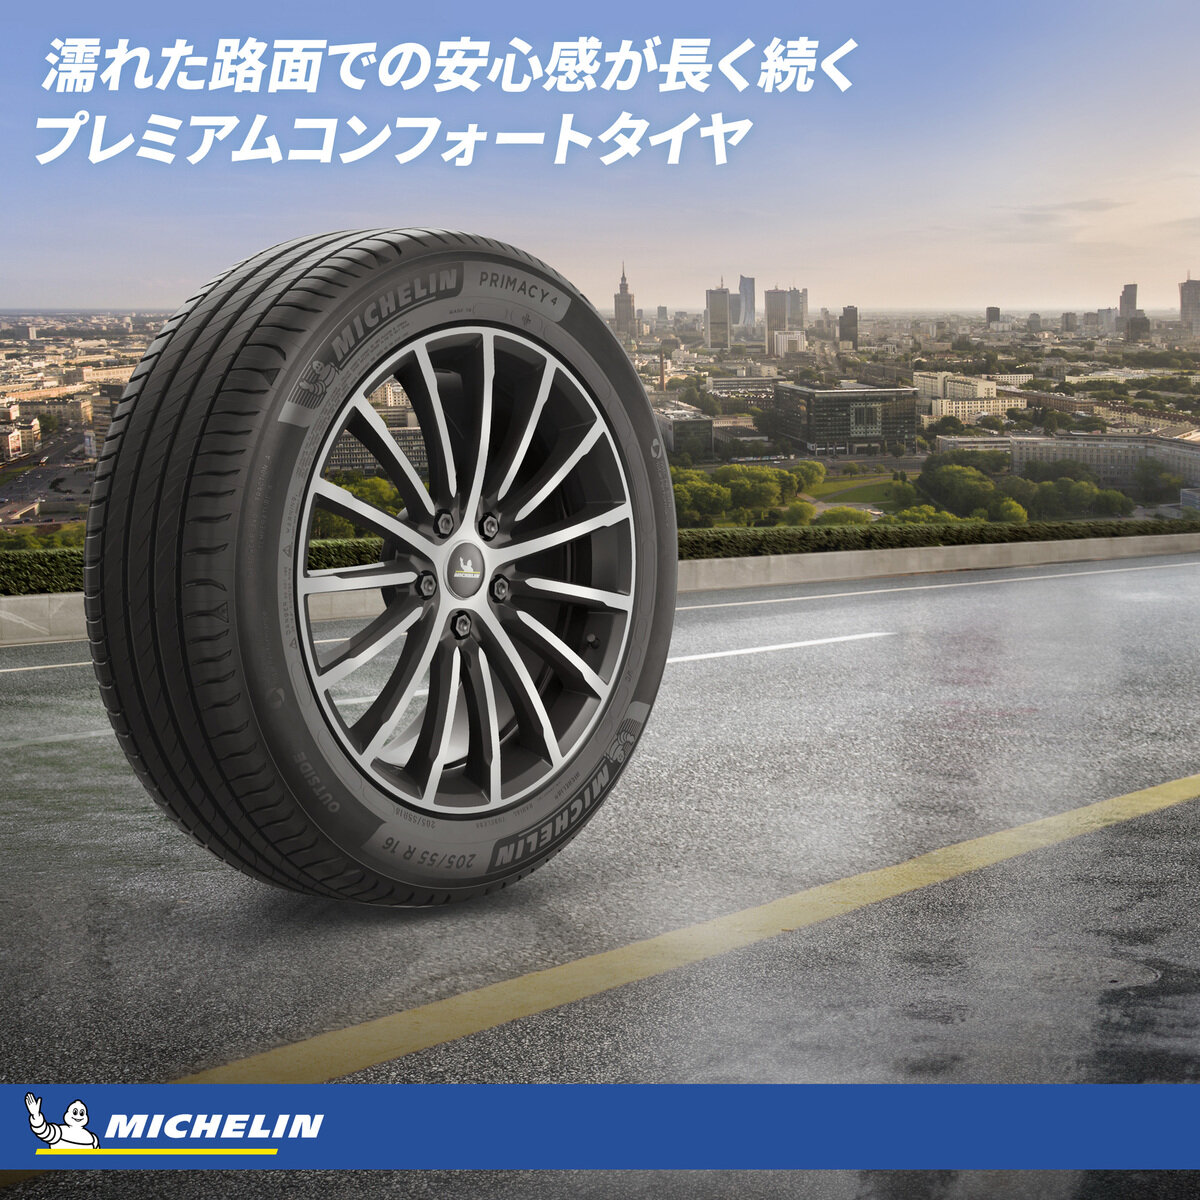 Michelin 225/45R17 94W XLTL PRIMACY4+ MI Costco Japan